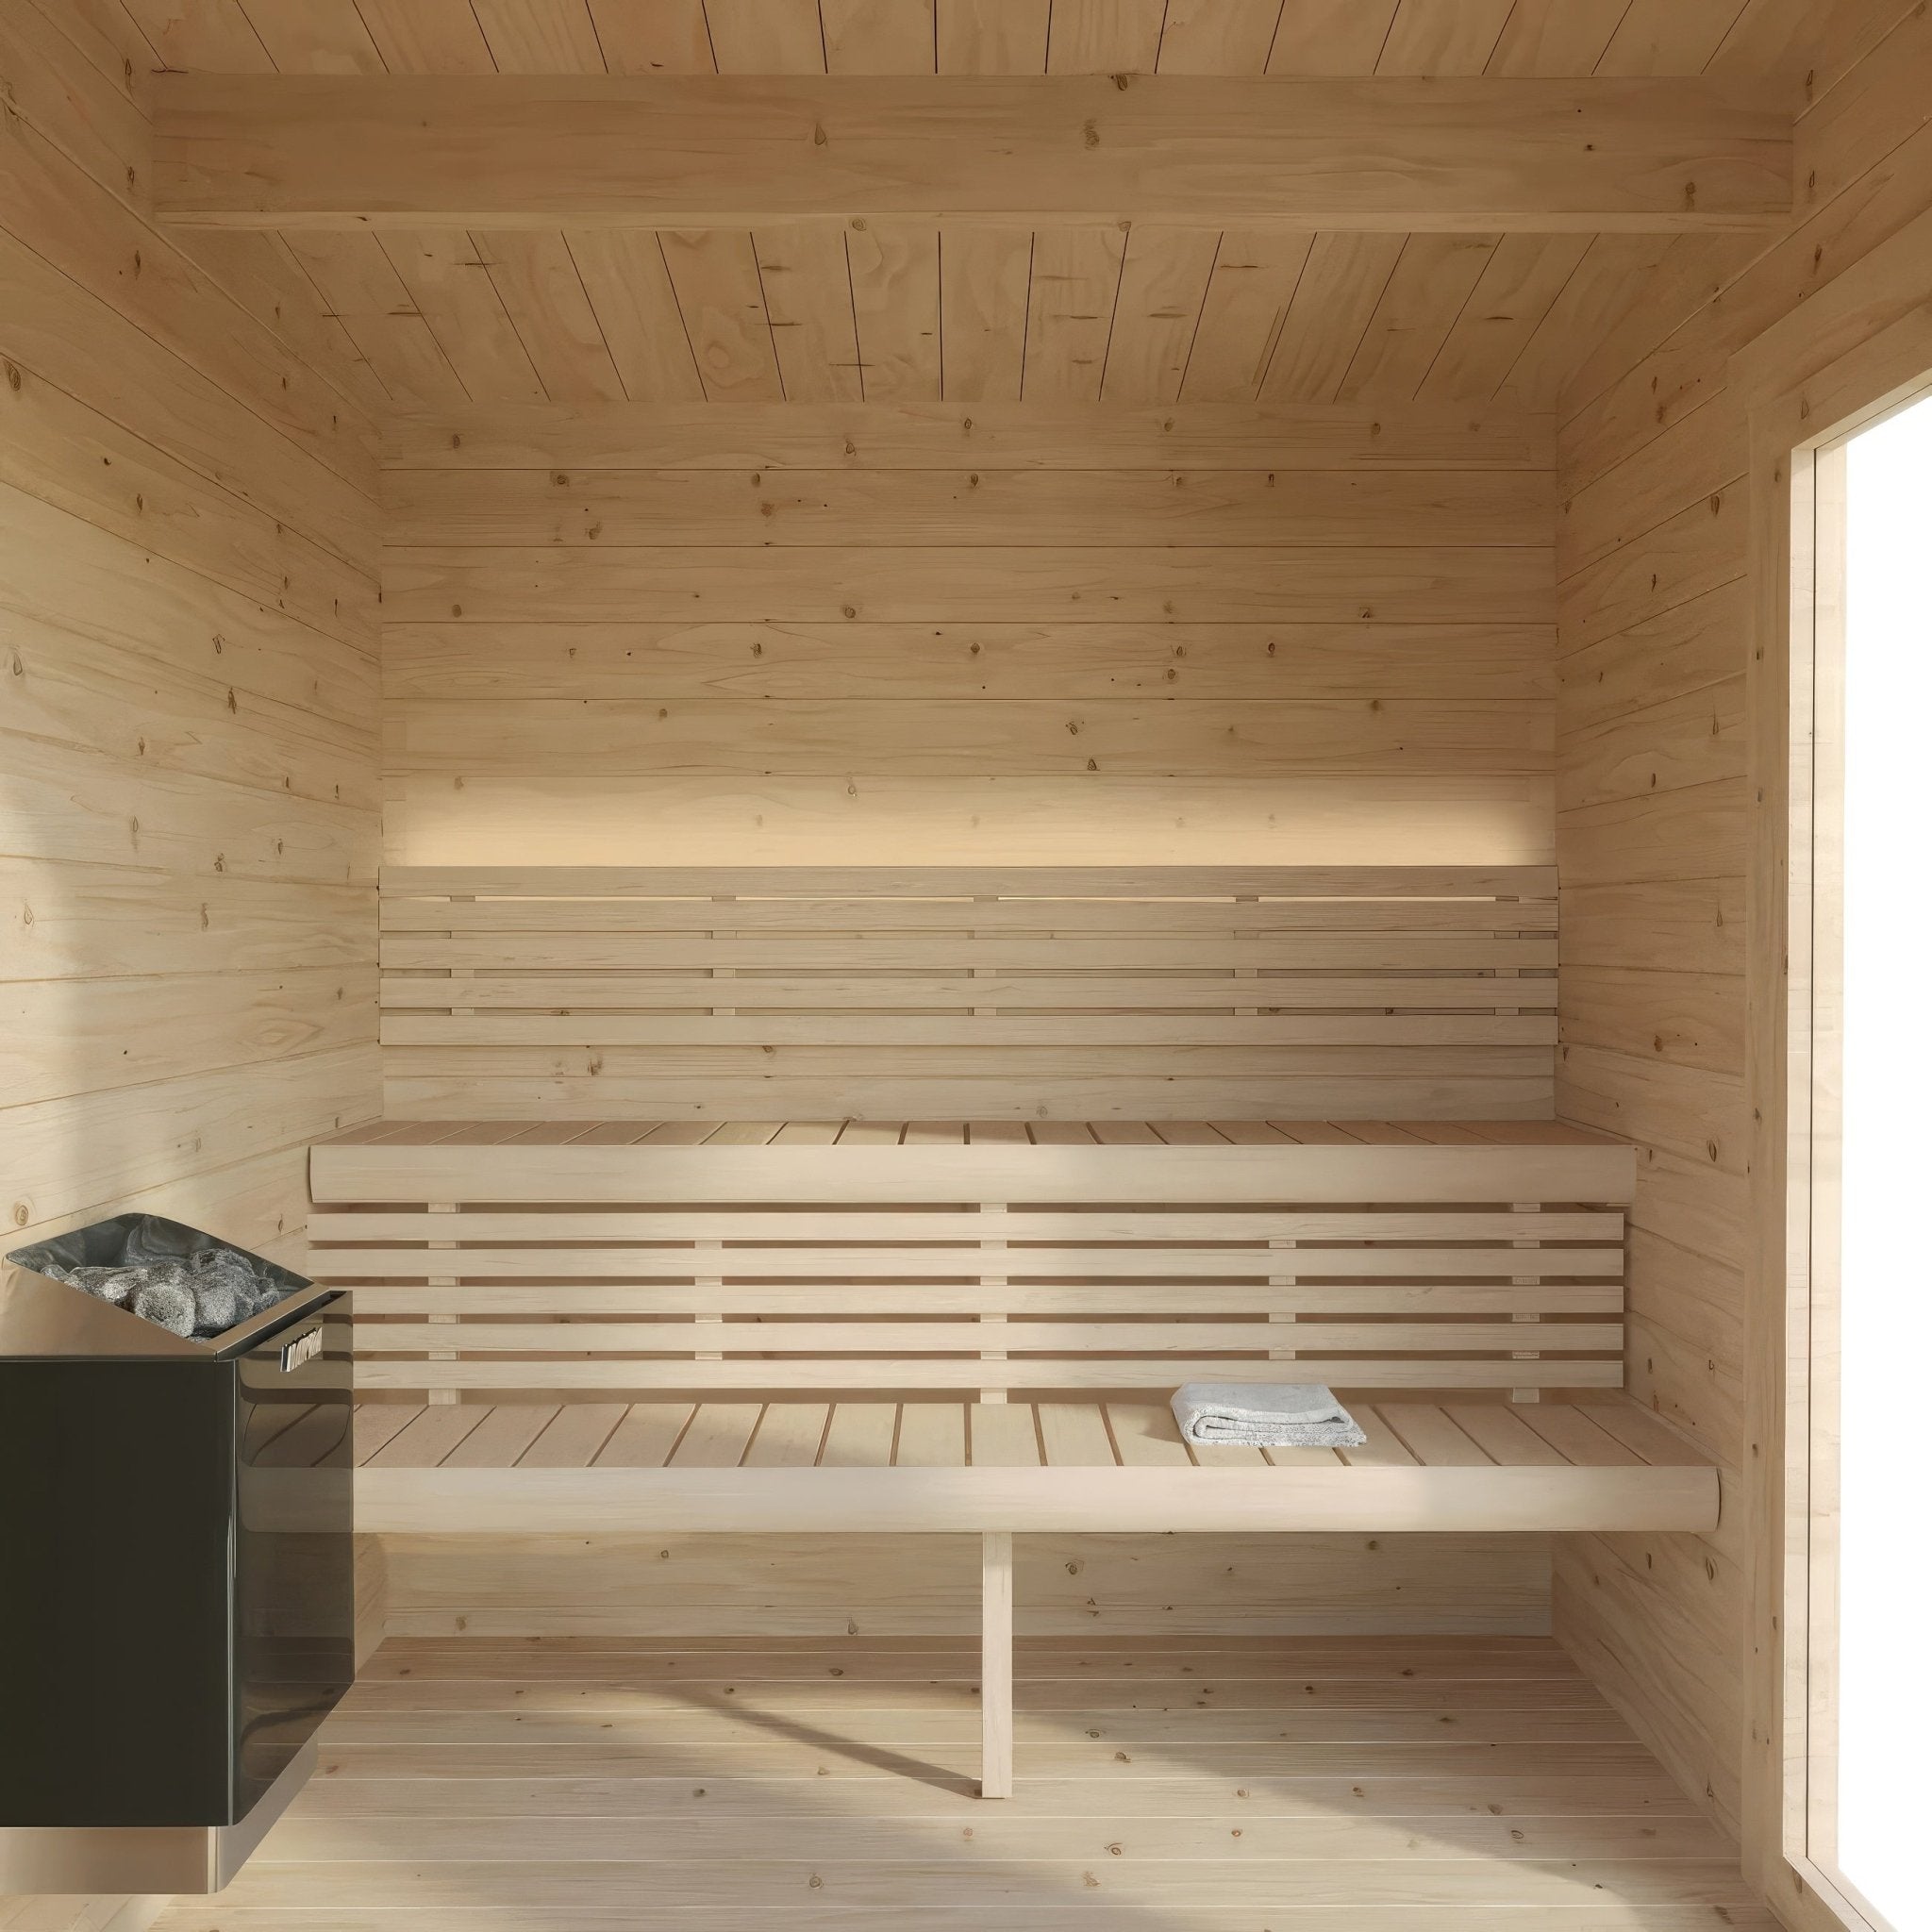 SaunaLife Model G4 Outdoor Sauna Kit - Elite Vitality